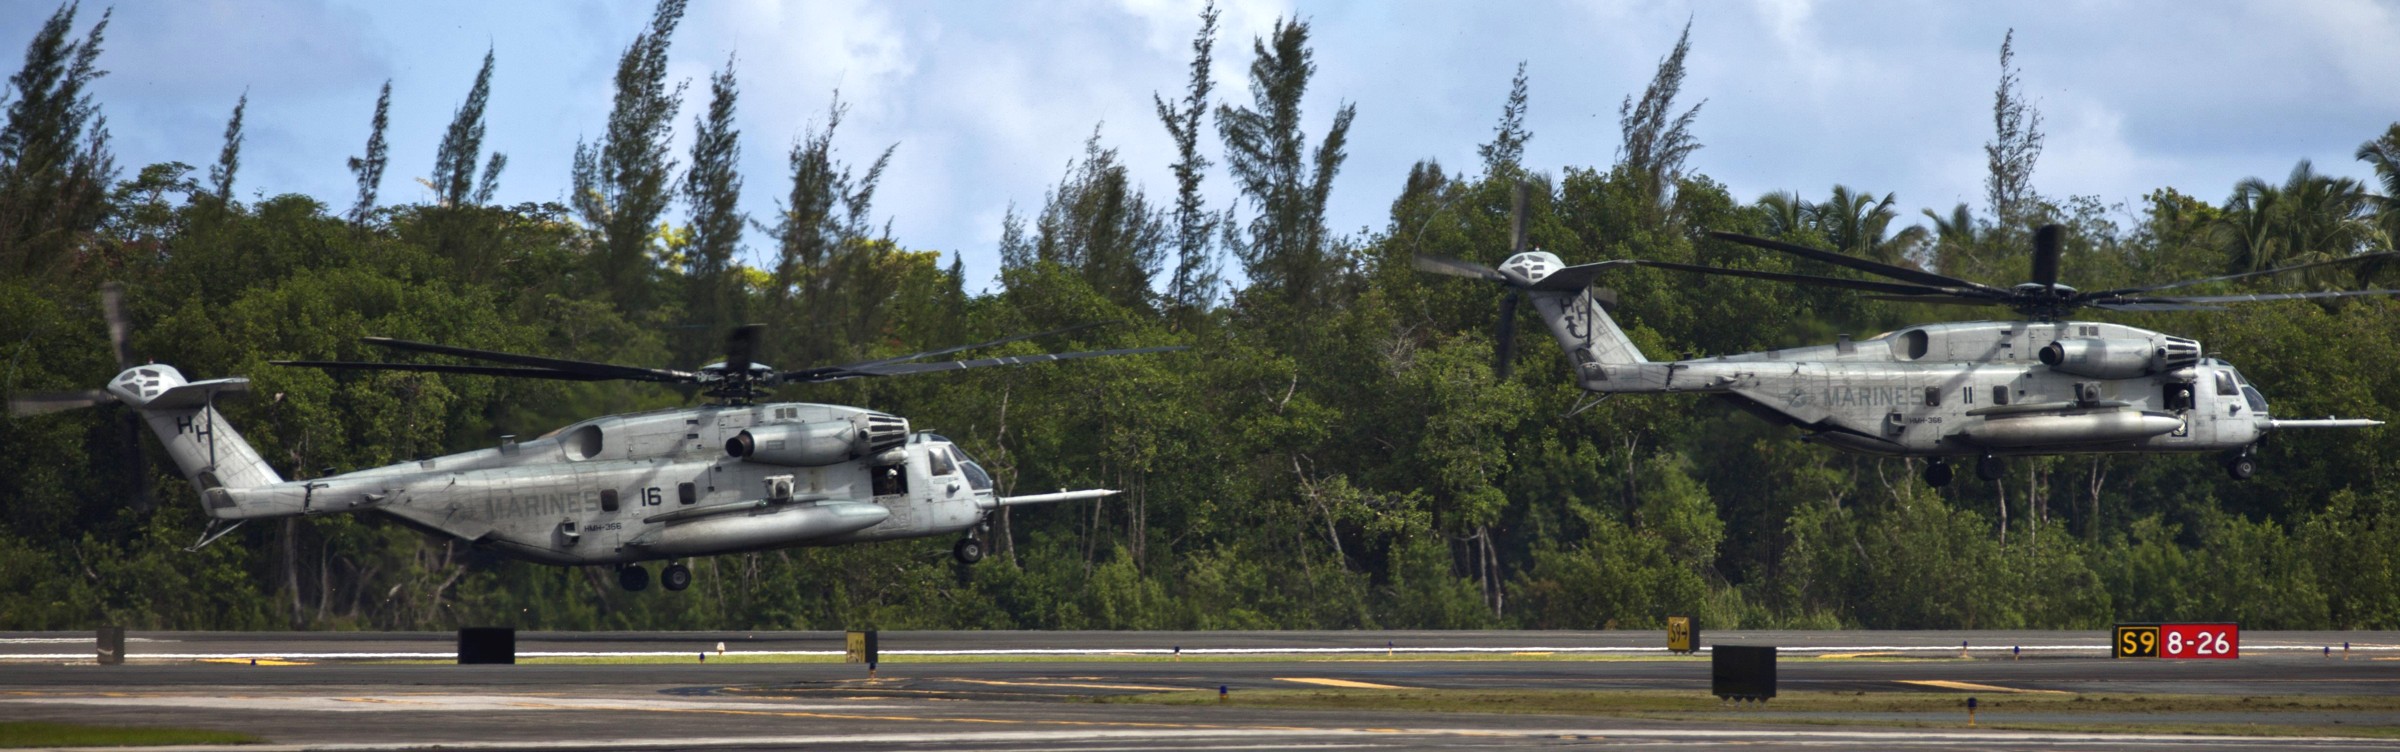 hmh-366 hammerheads ch-53e super stallion marine heavy helicopter squadron usmc munitz angb puerto rico 129